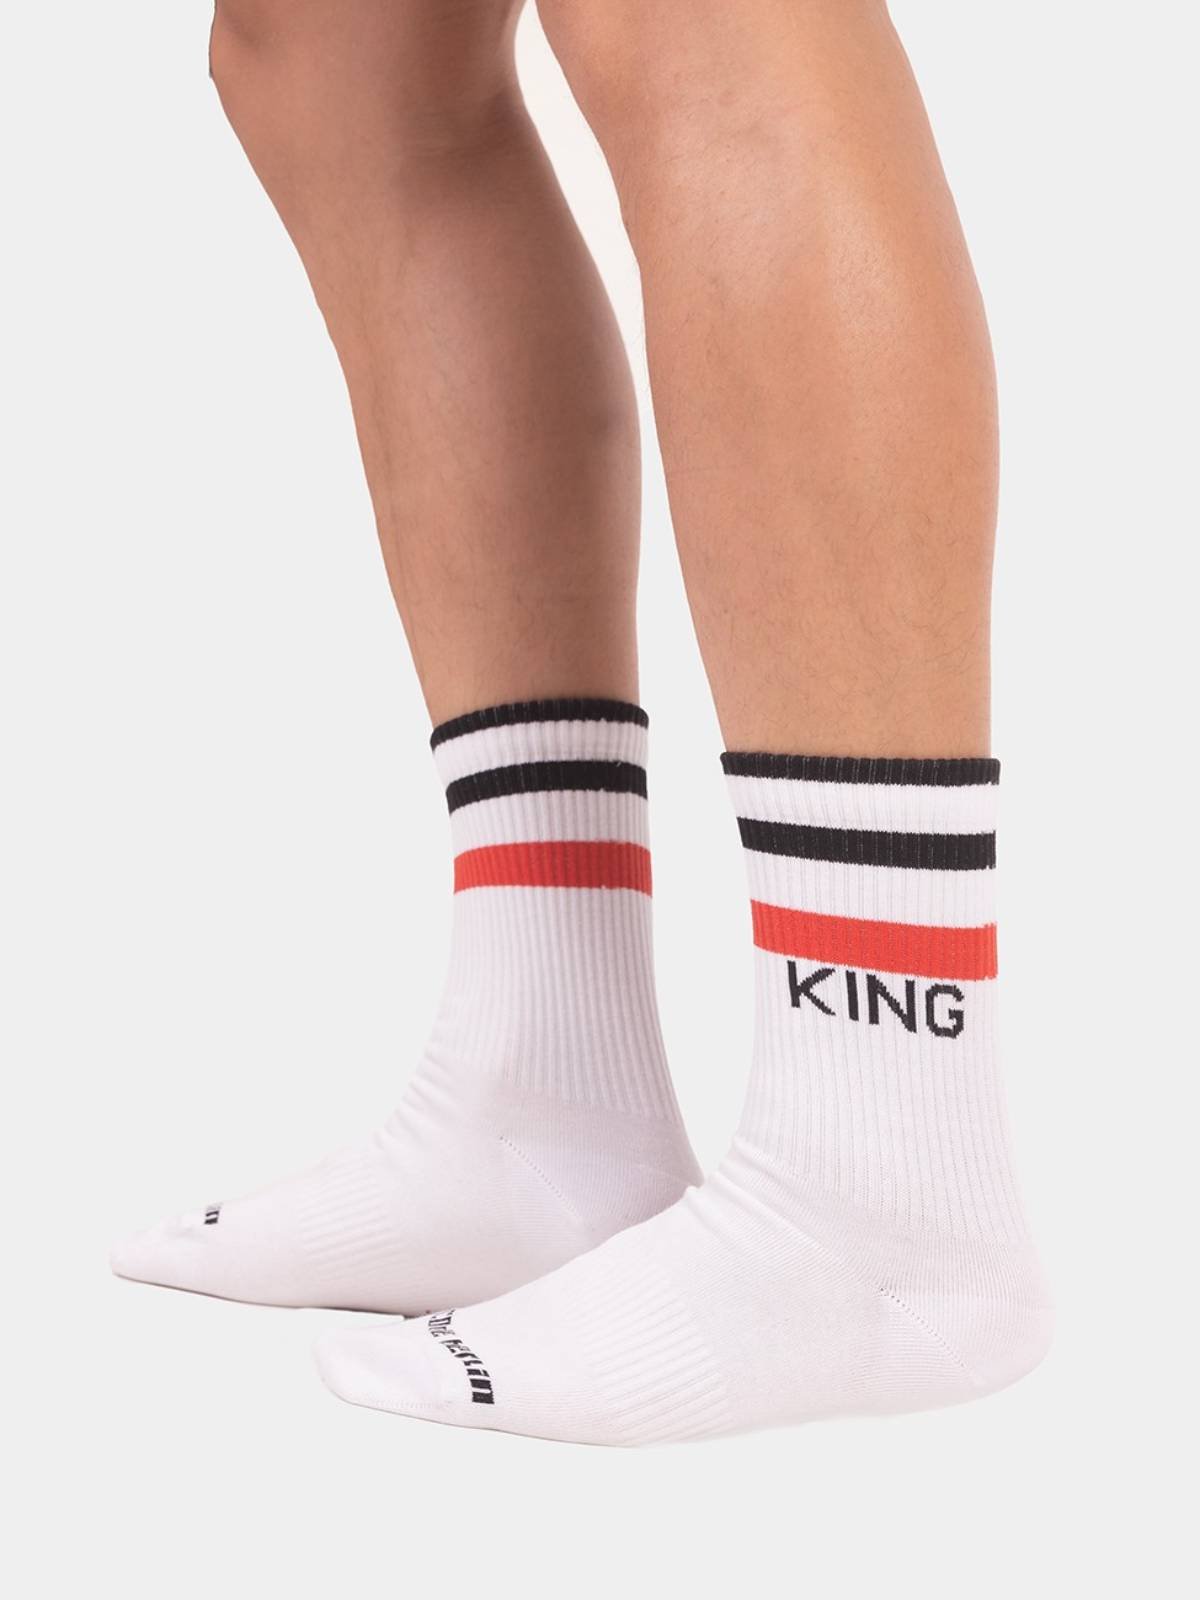 Urban Socks King